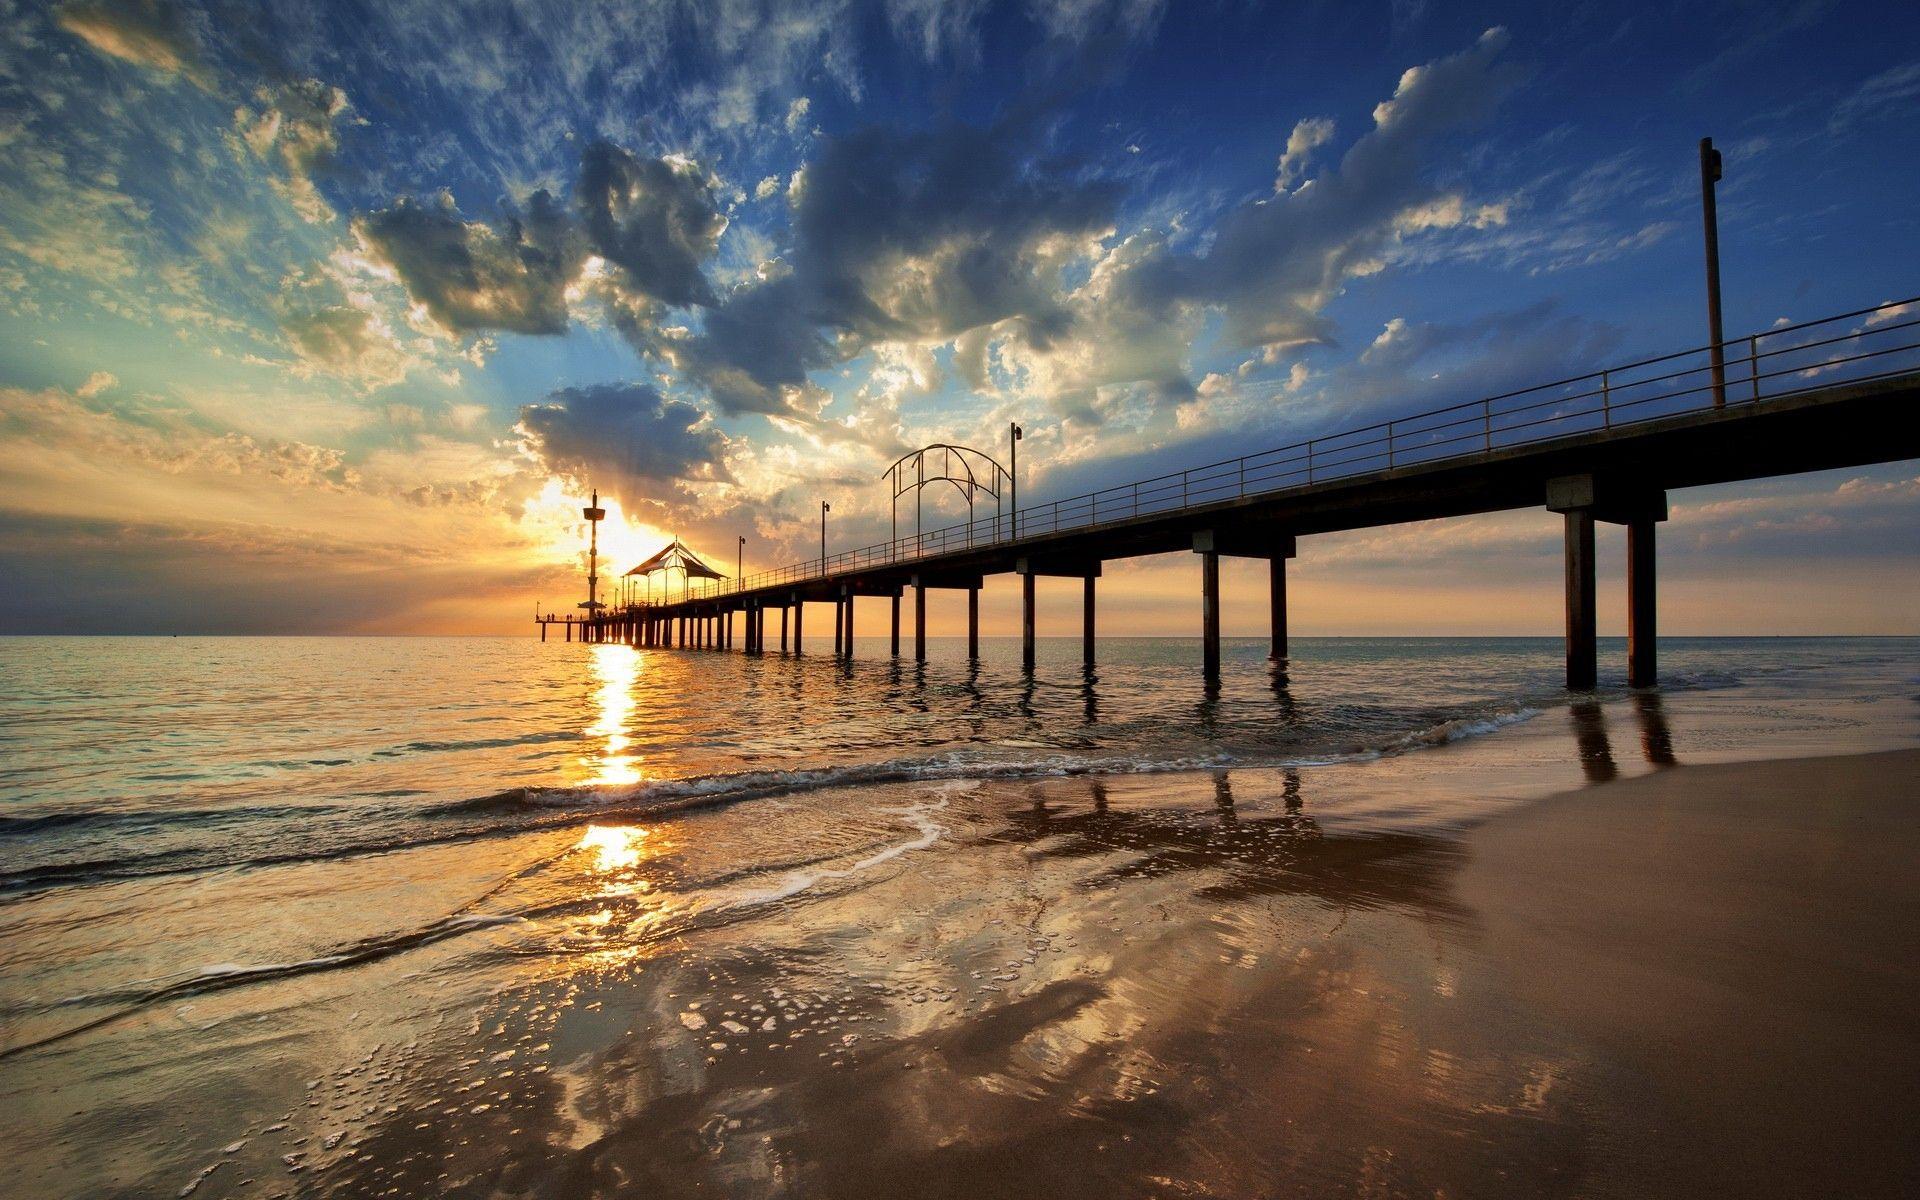 Beaches: Jetty Brighton Sea Nature Image For Desktop Background